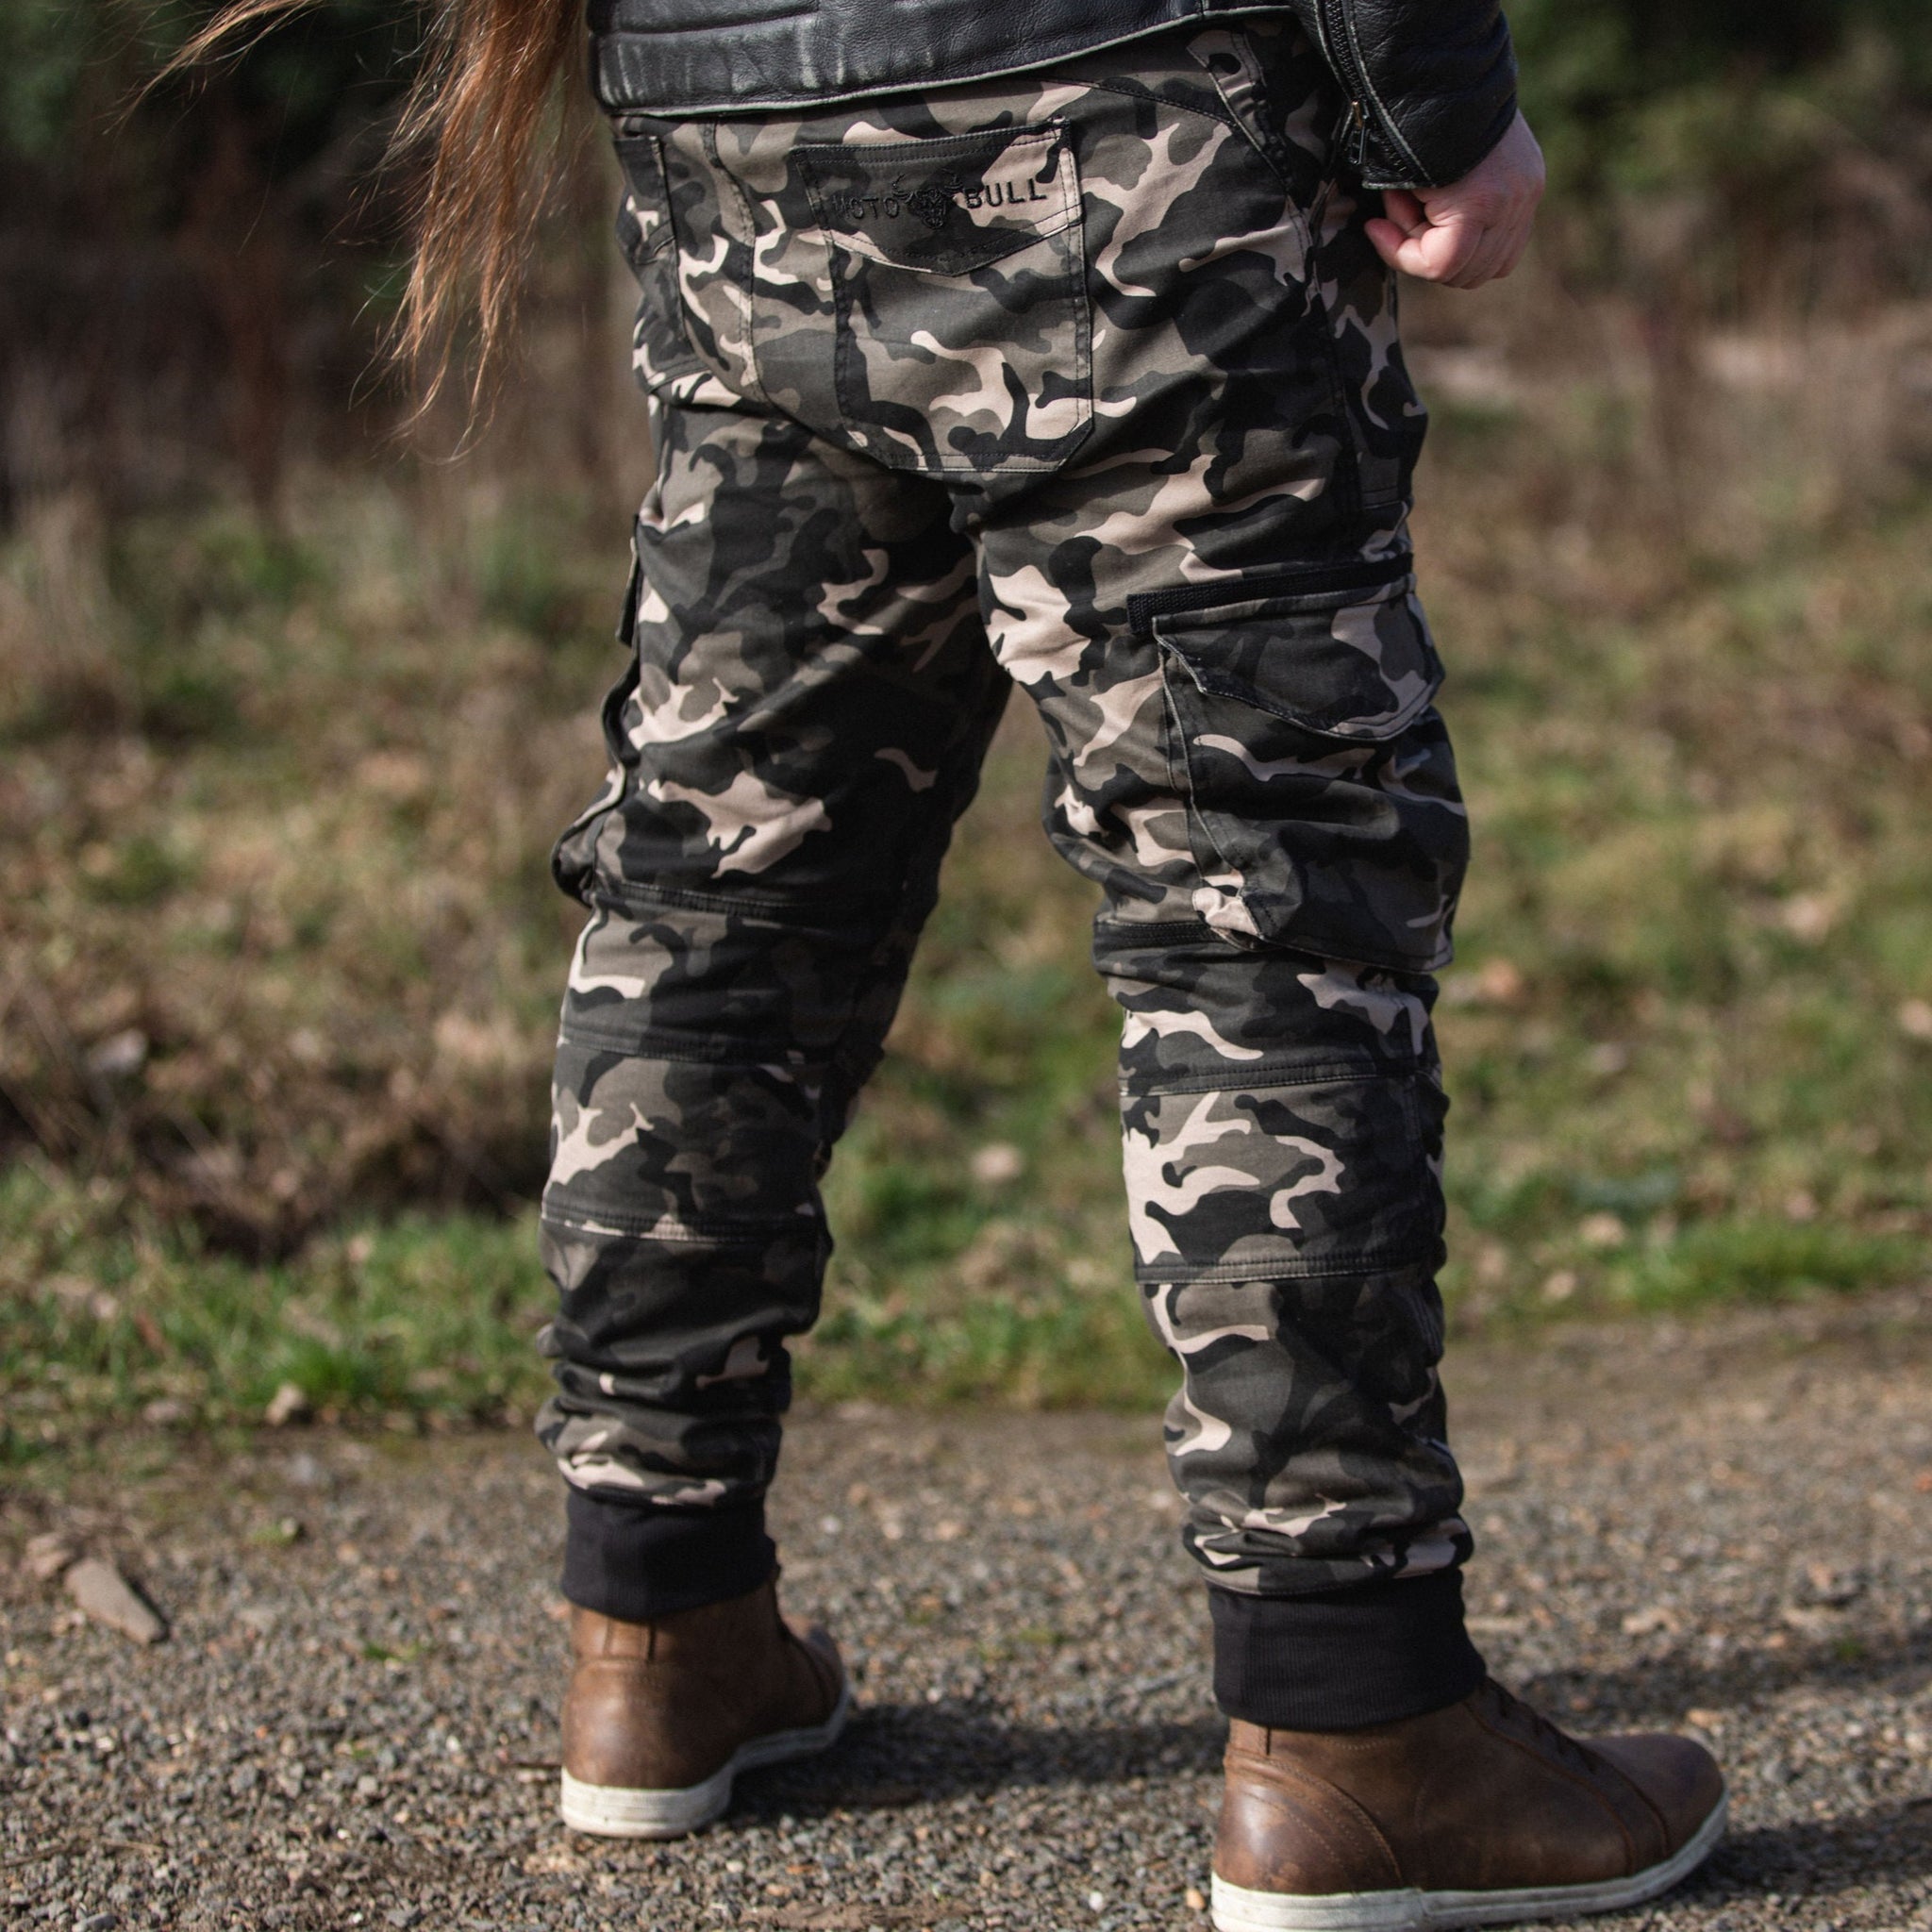 StarTreene Skinny Camo Trousers Women Multi-Pocket Combat Work Pants Long  Pencil Trousers (Camouflage, 4-6 UK/EU 34) : Amazon.co.uk: Fashion